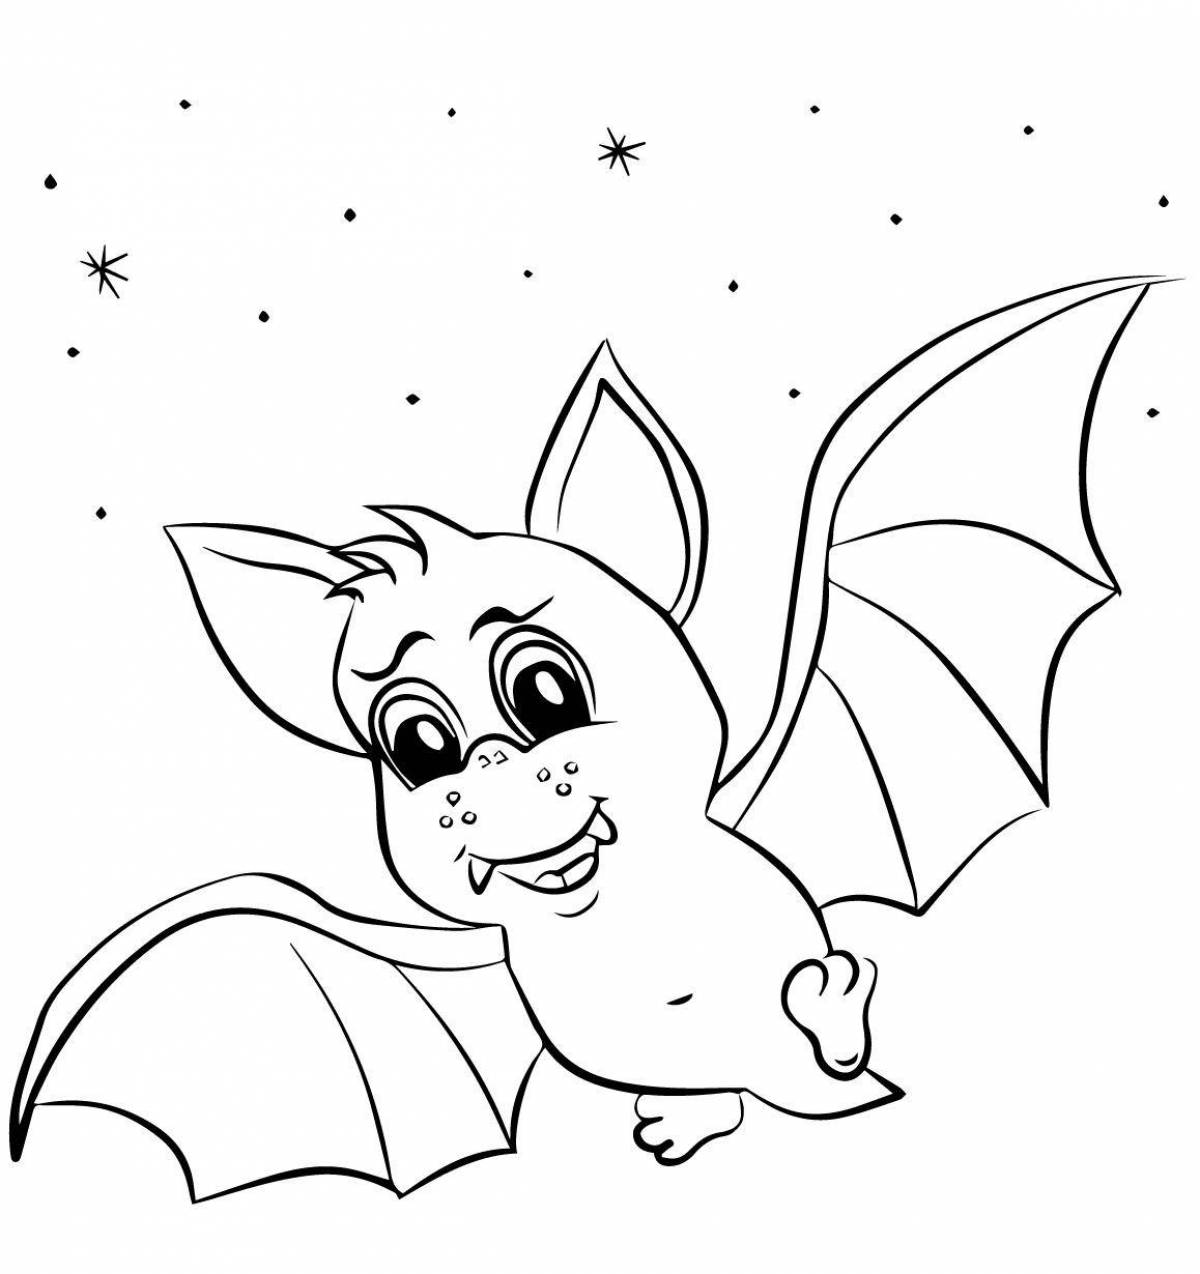 Incredible bats coloring book for kids